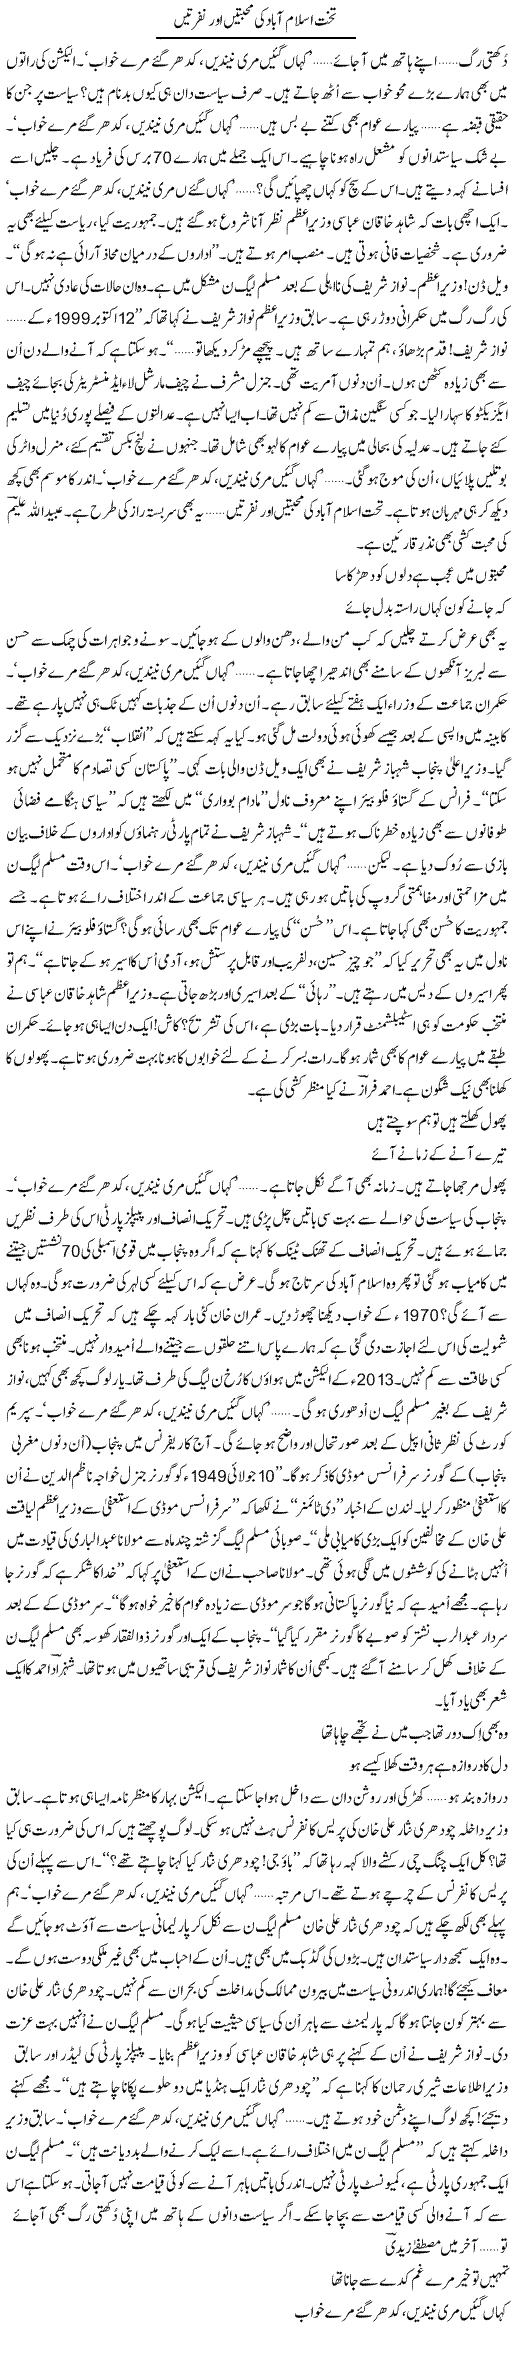 Takhat Islamabad Ki Muhabbaten Aur Nafraten | Ejaz Hafeez Khan | Daily Urdu Columns